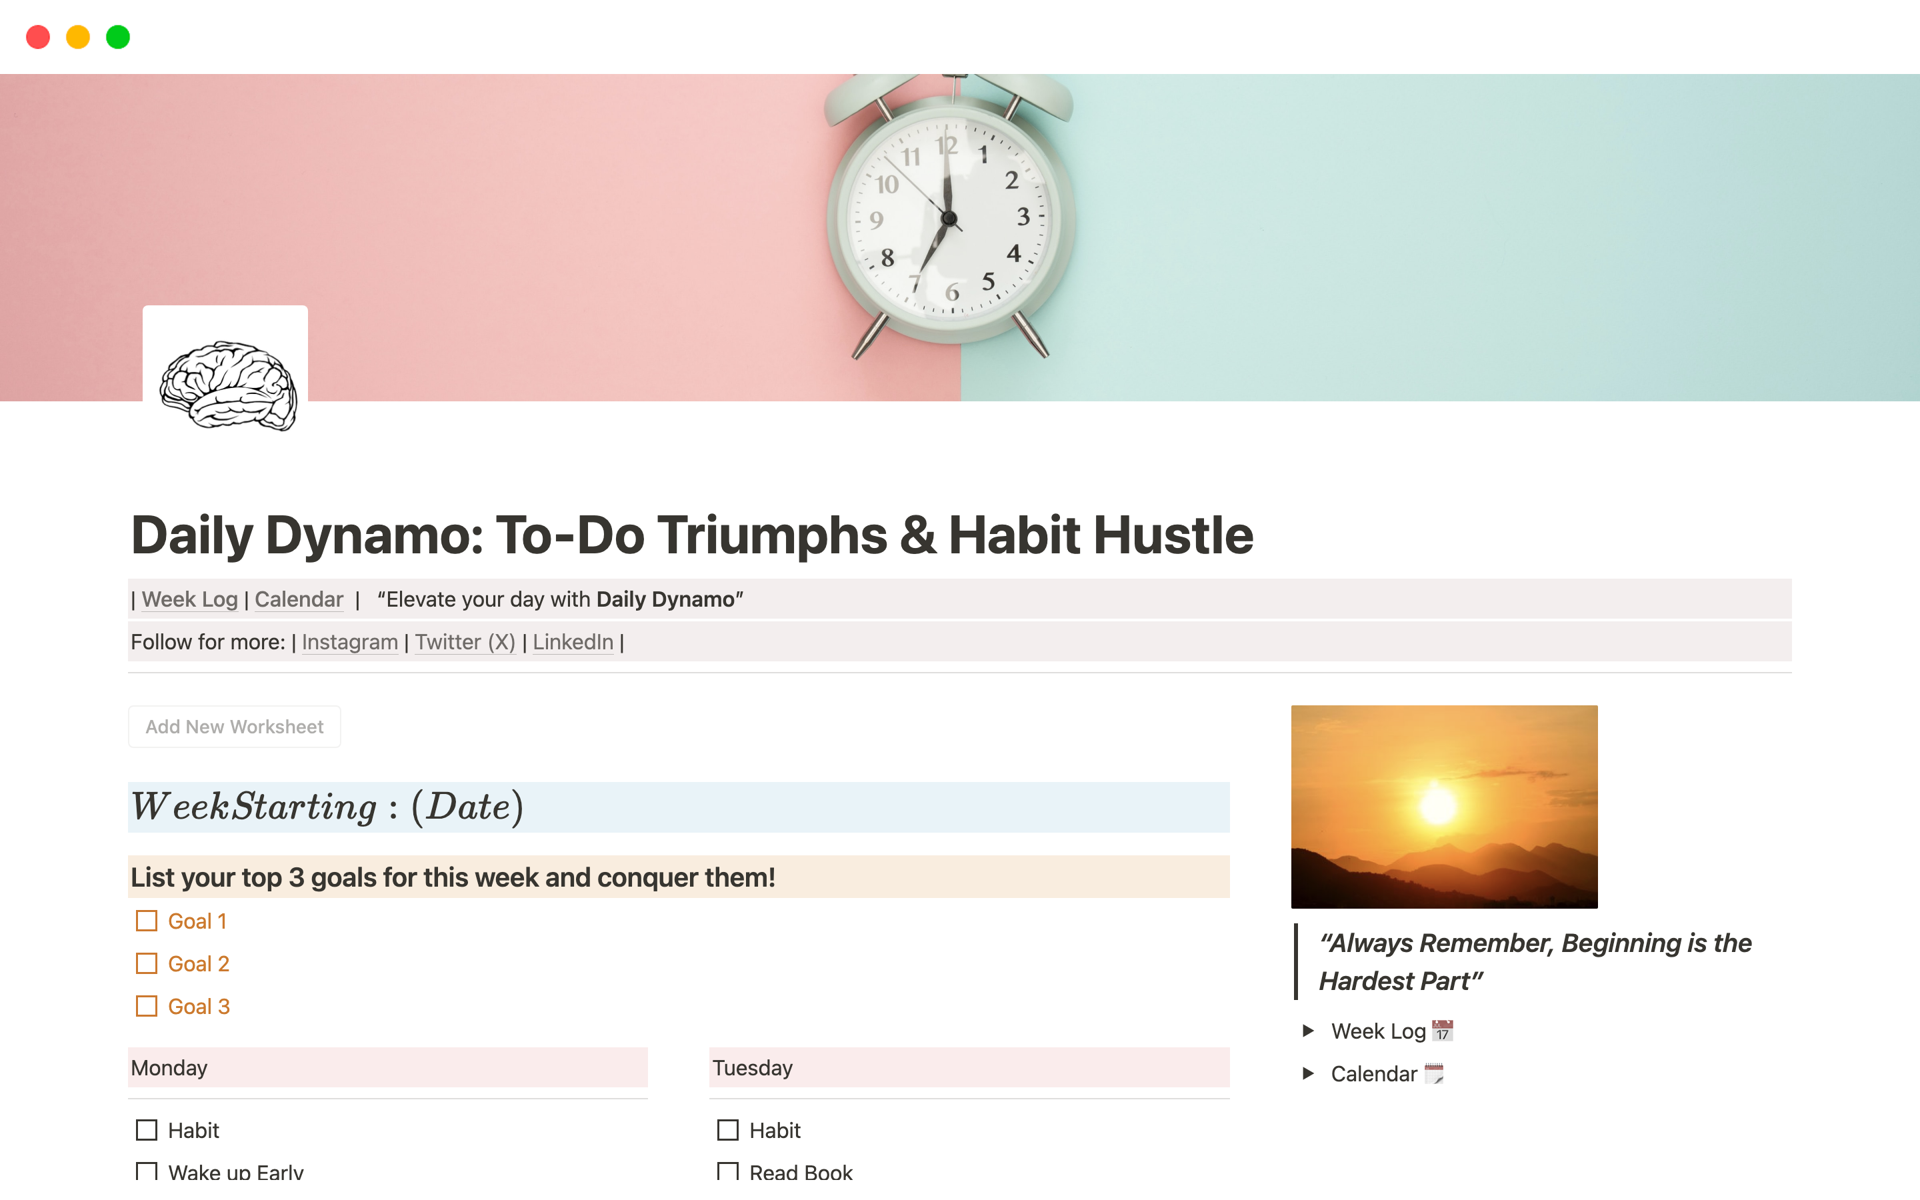 Vista previa de plantilla para Daily Dynamo: To-Do Triumphs & Habit Hustle